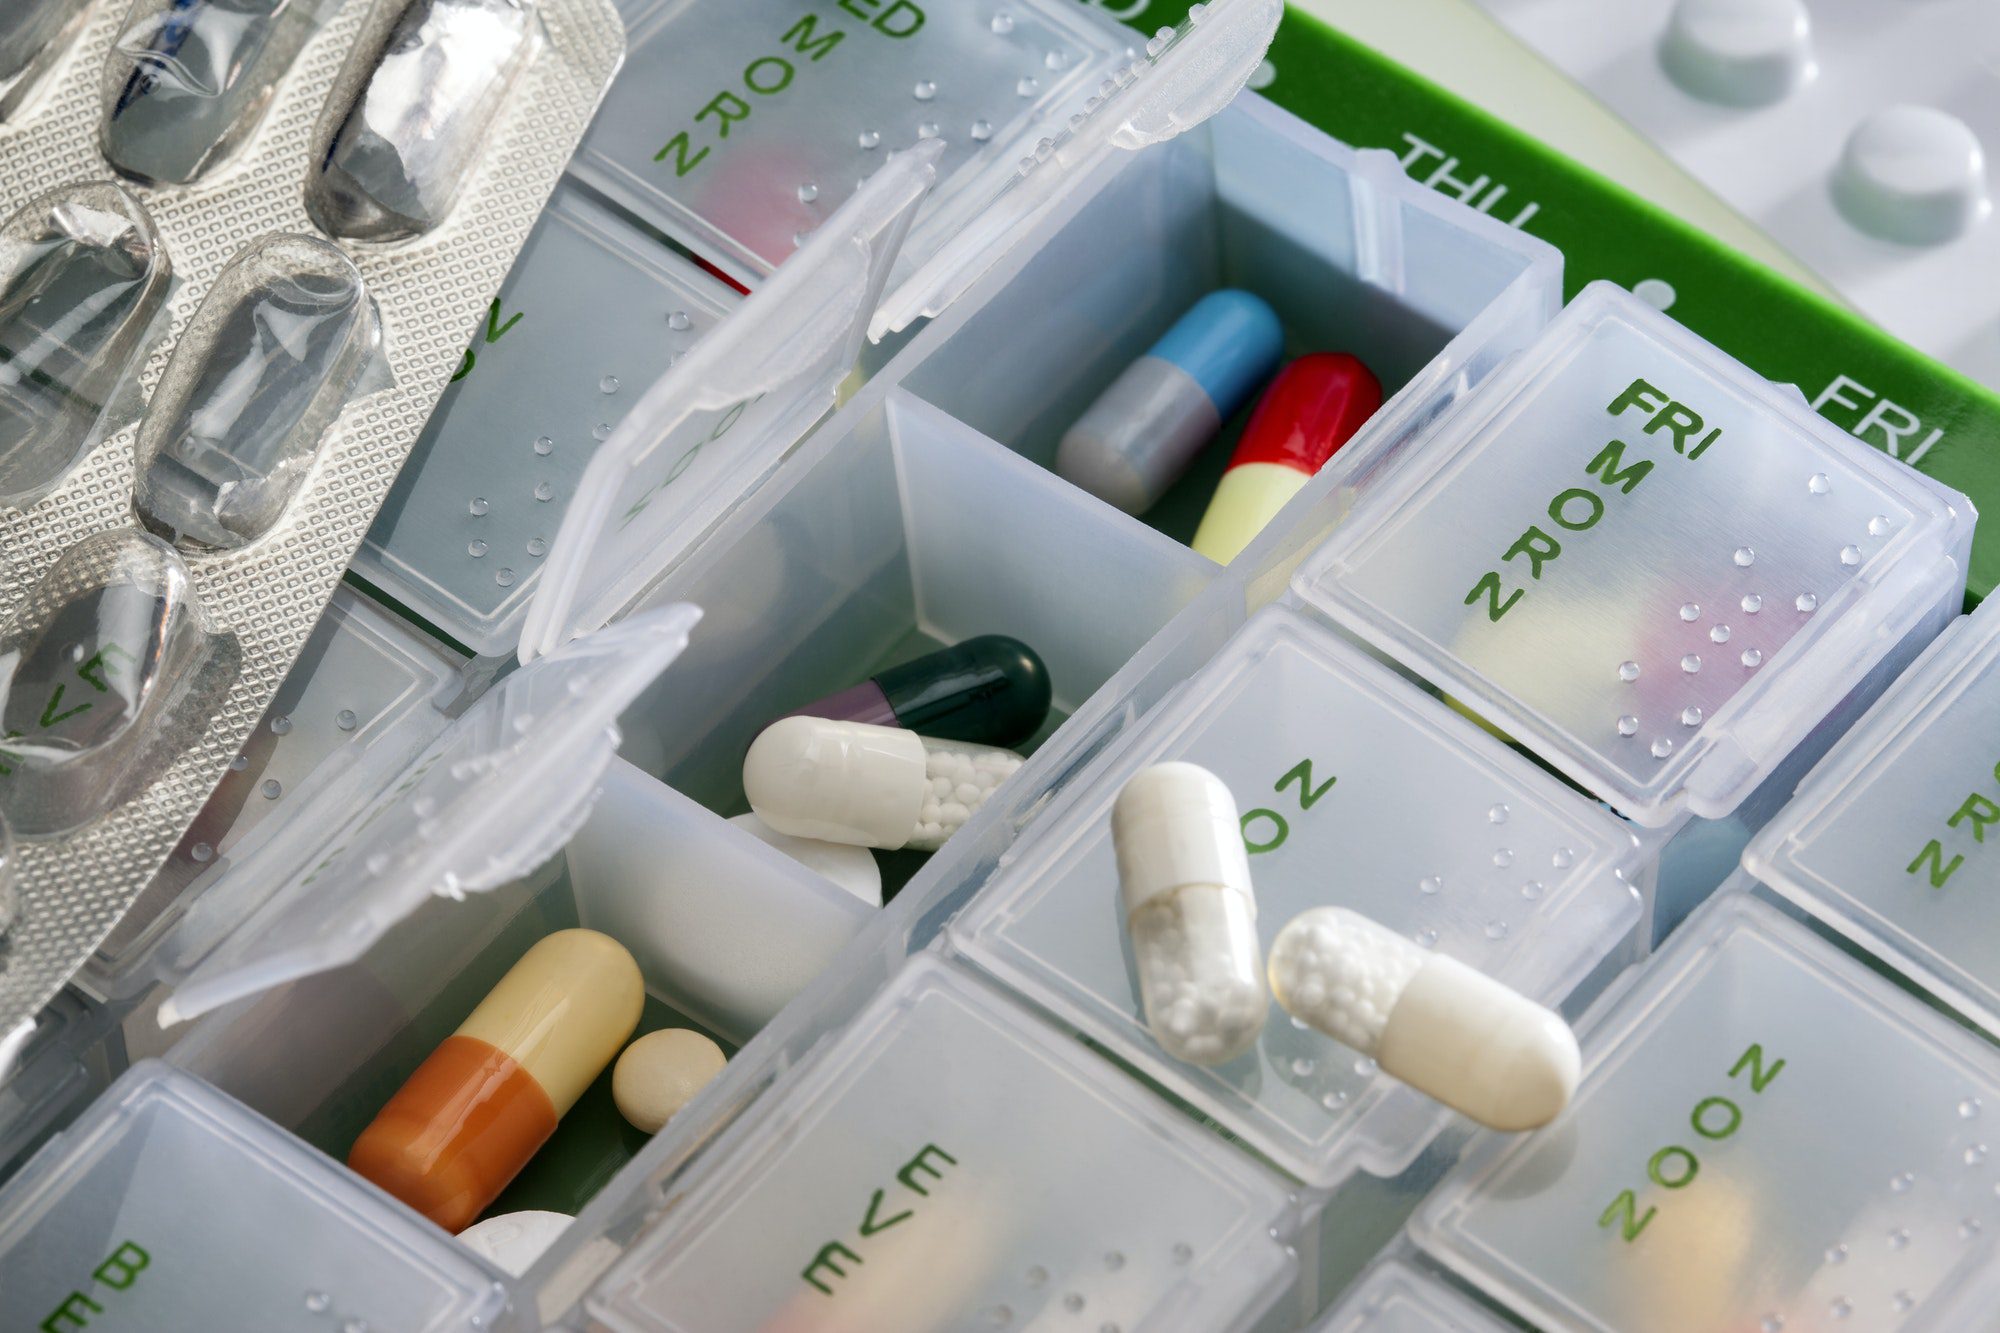 Prescription drugs covered under the Medicar Part D plan in a plastic case.